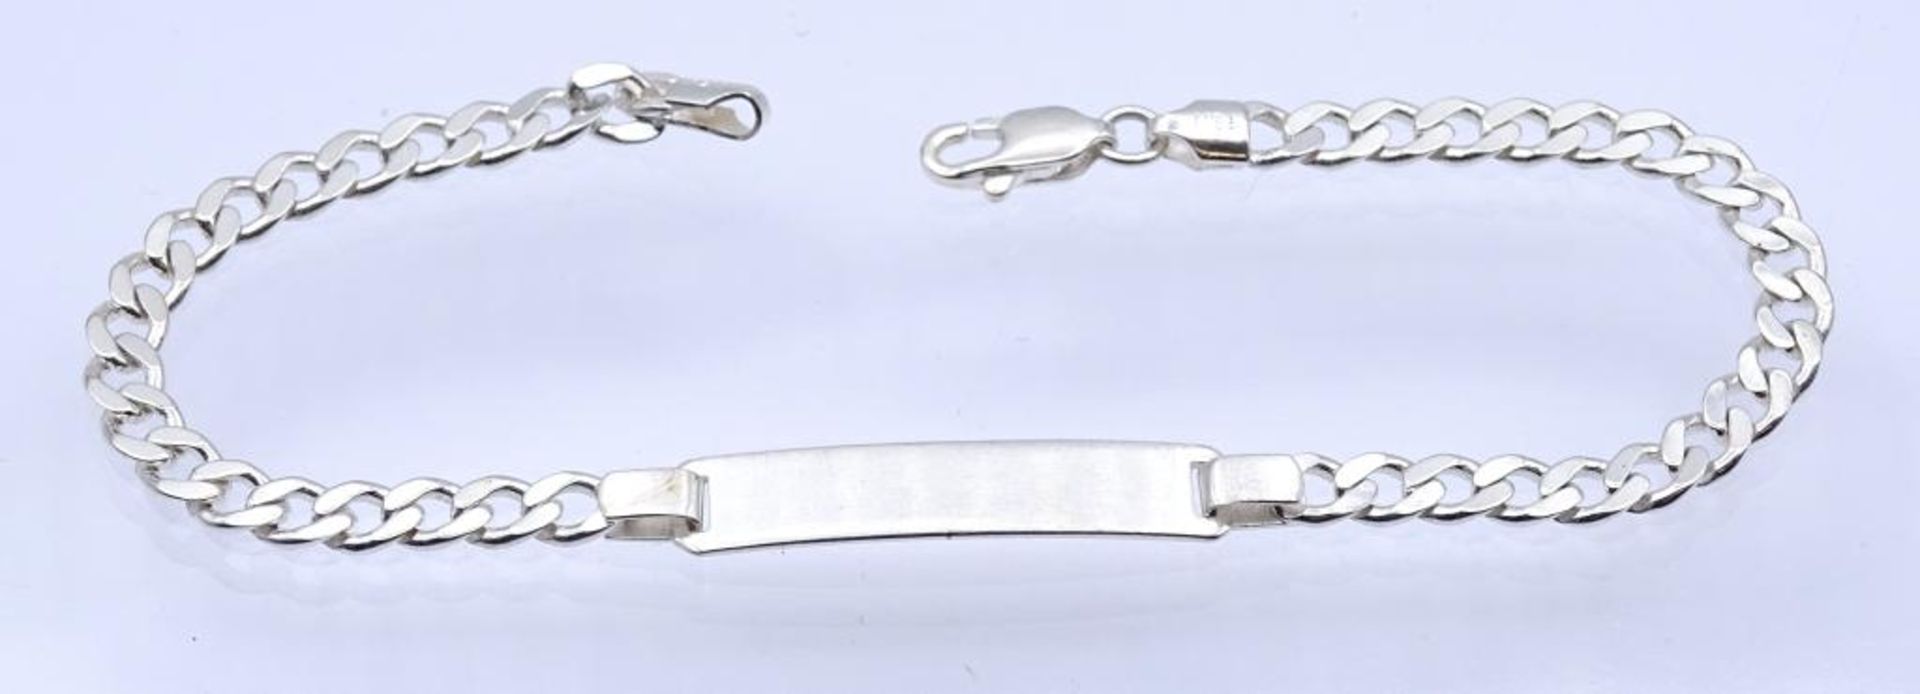 Identitäts Armband,Sterling Silber 925/000, Gravur Platte ungraviert,L- 21,5cm, 7,7gr., b-4,7m- - -